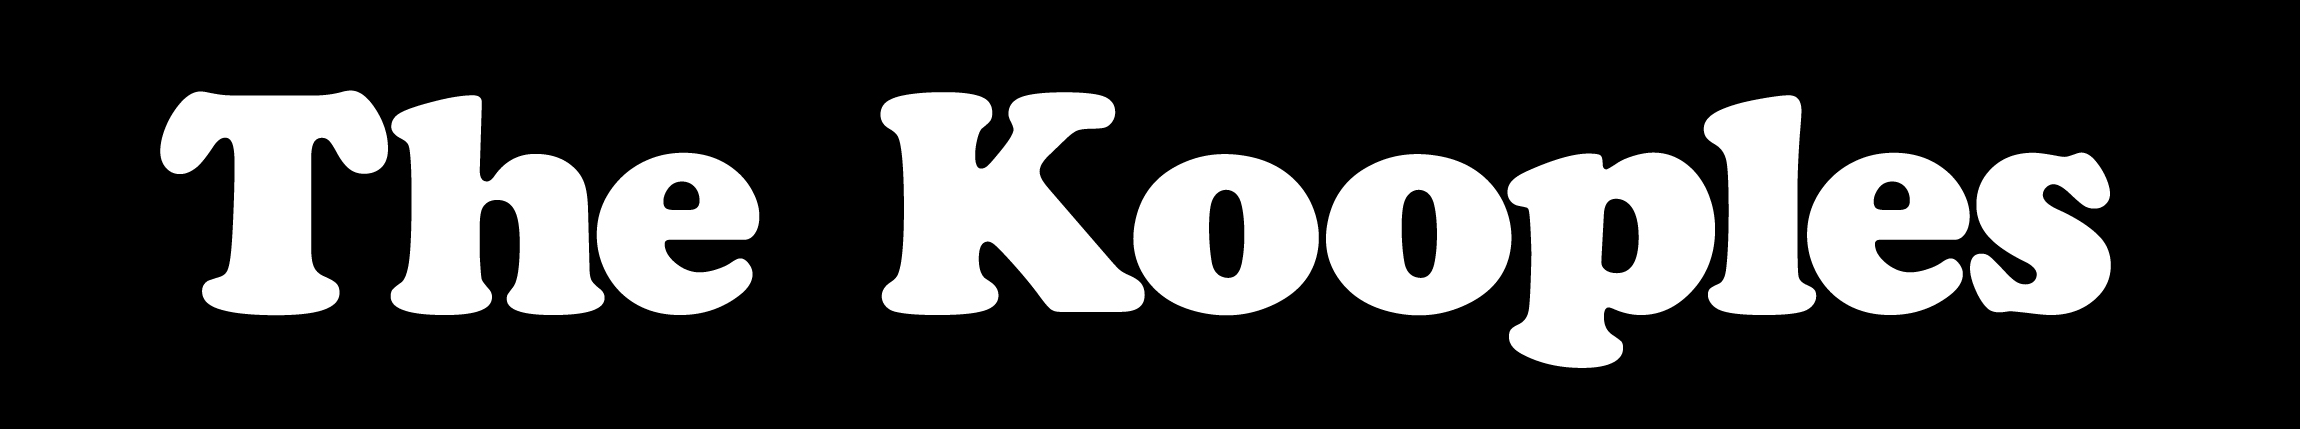 The Kooples – Logos Download